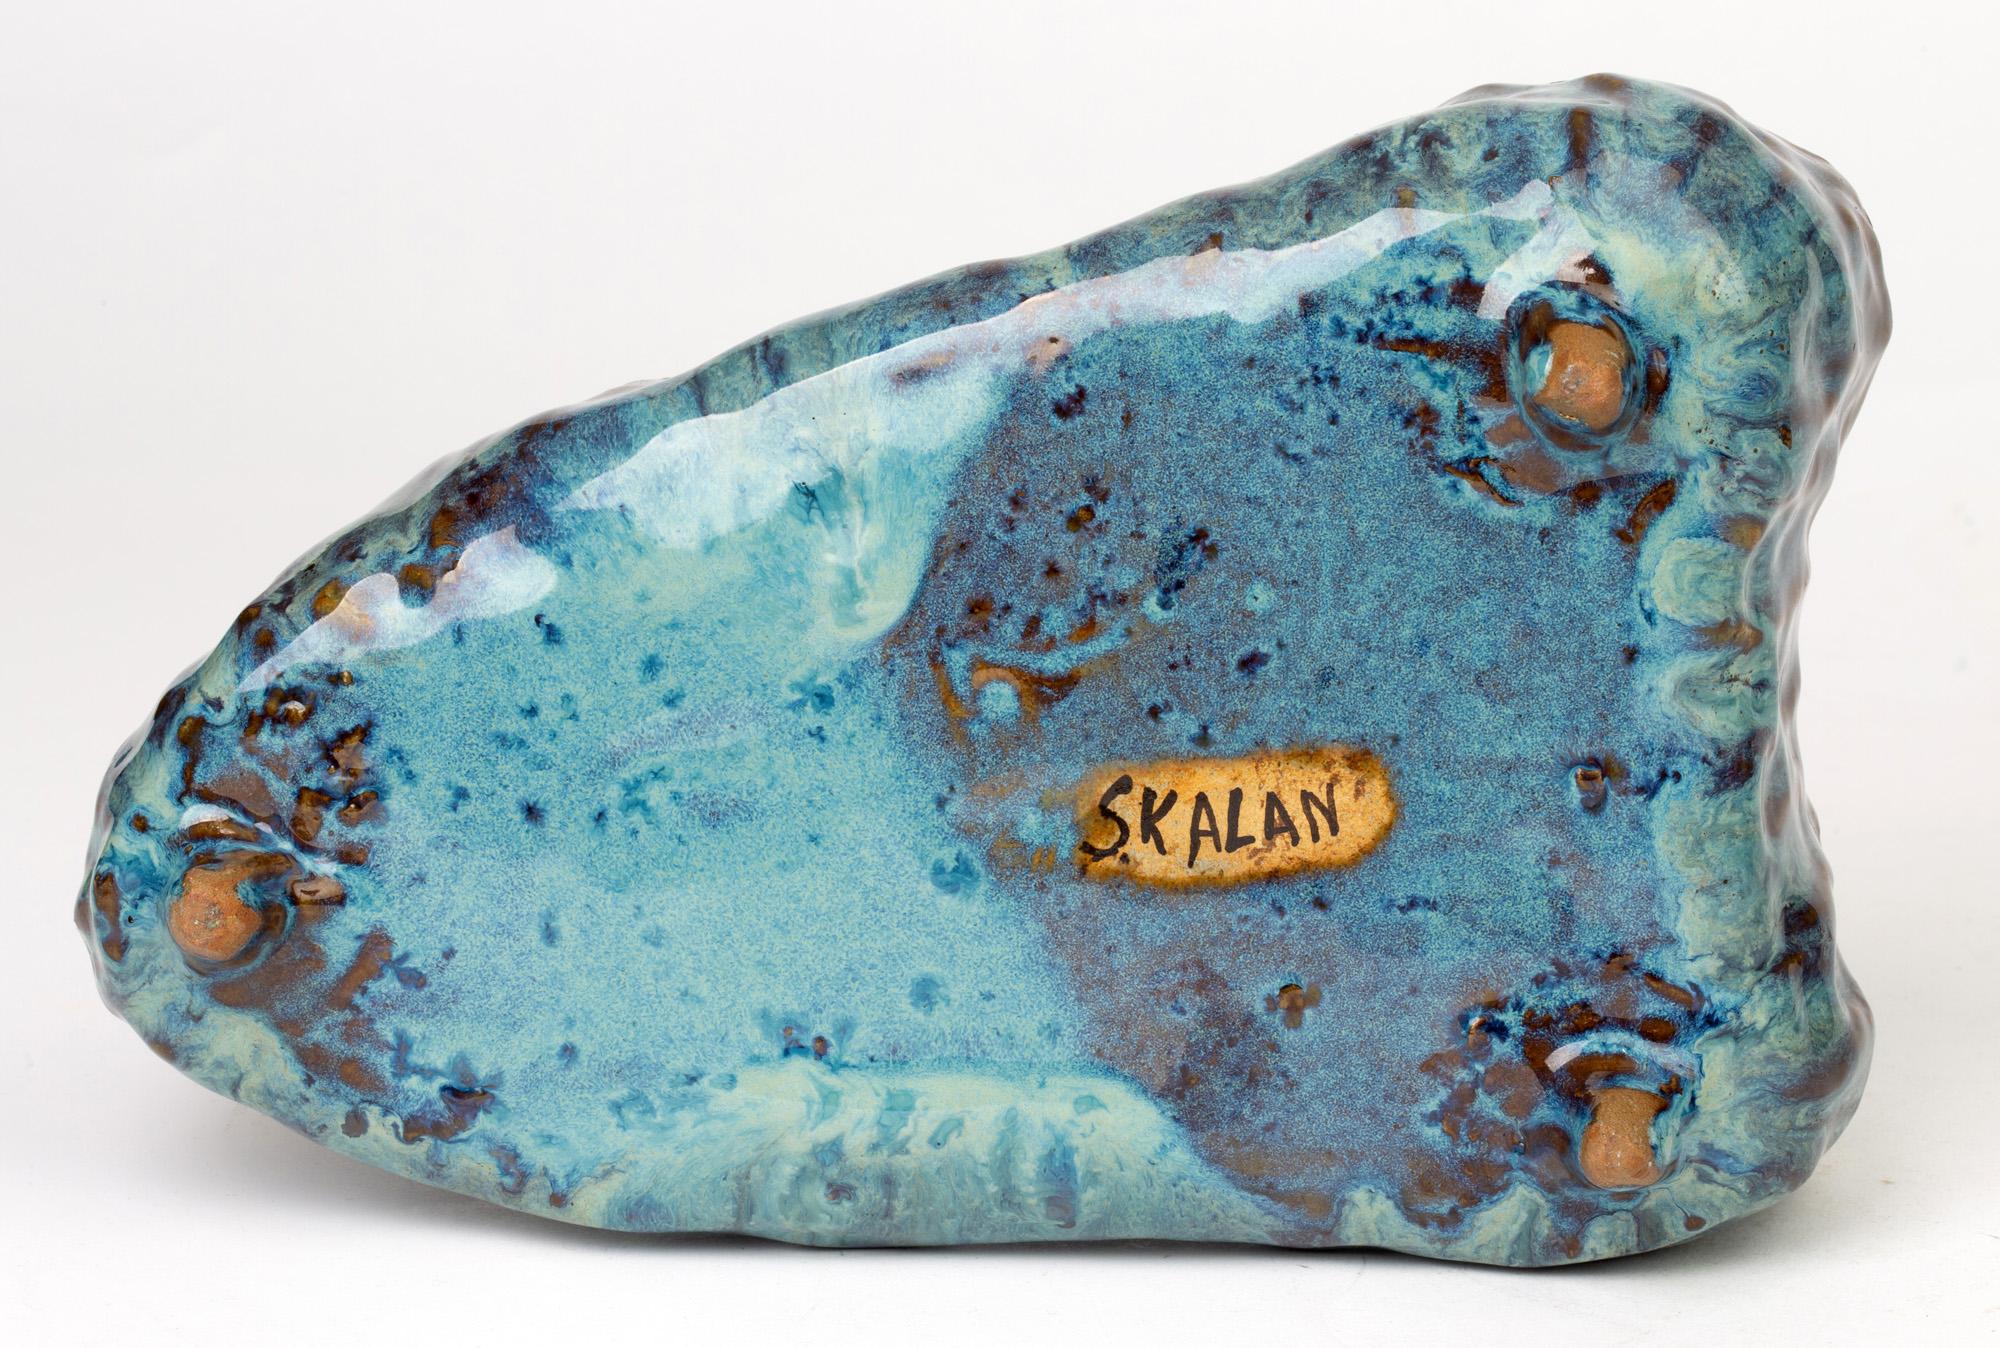 Stephanie Kalan Studio Pottery Sculptural Glazed Bowl 2